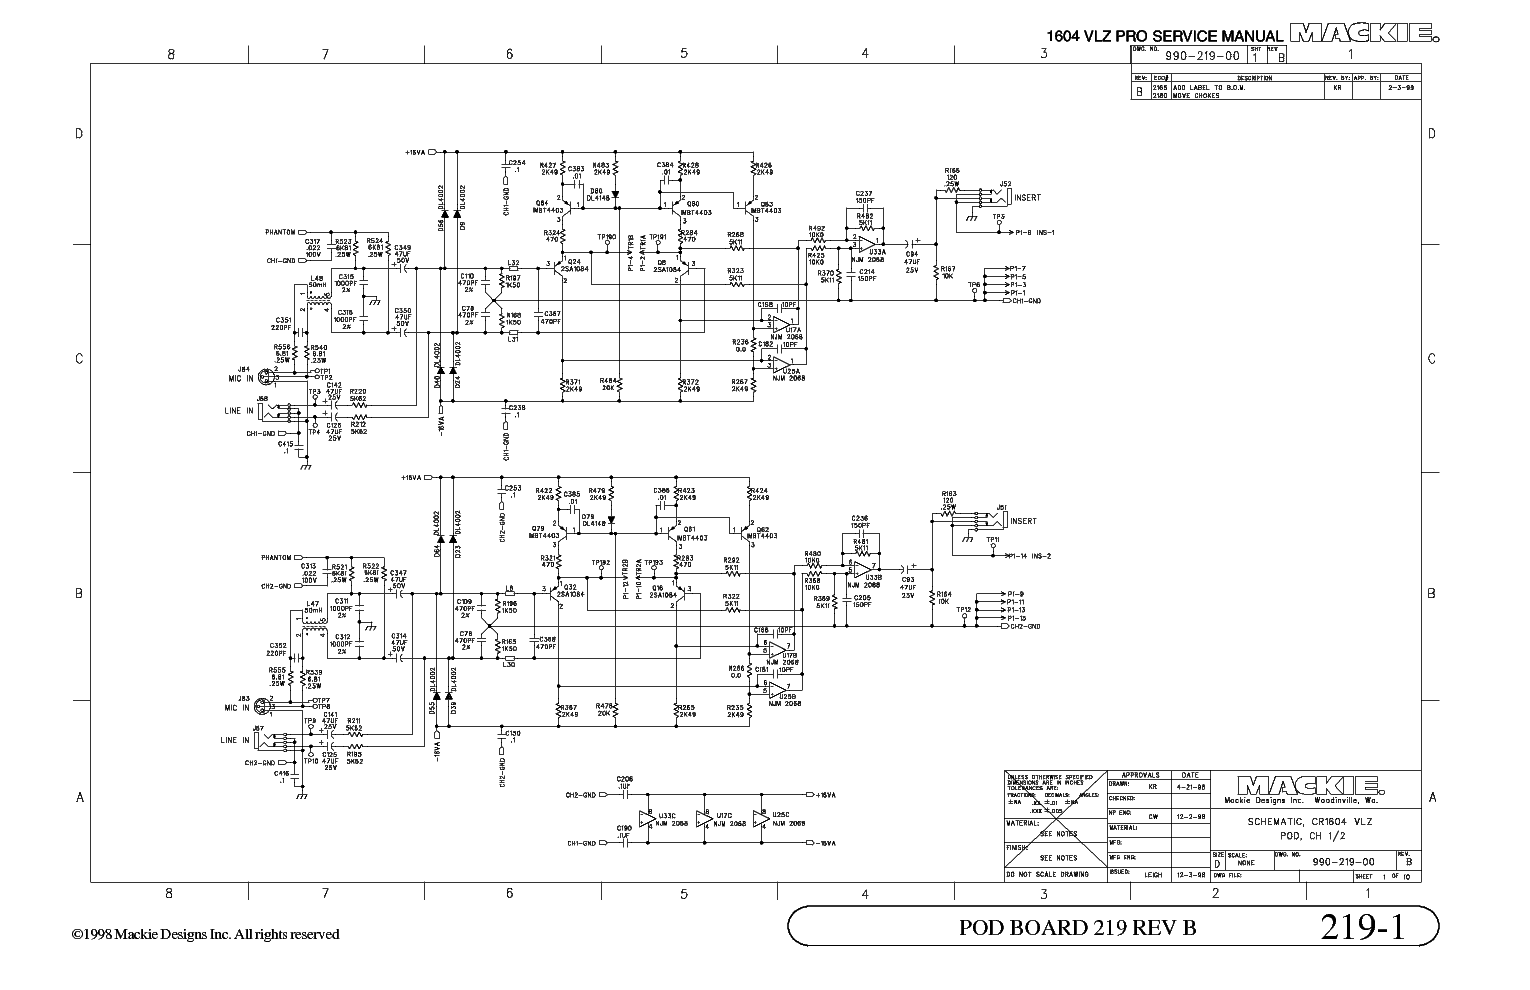 MACKIE 1604-VLZ-PRO MIXER Service Manual download, schematics, eeprom,  repair info for electronics experts